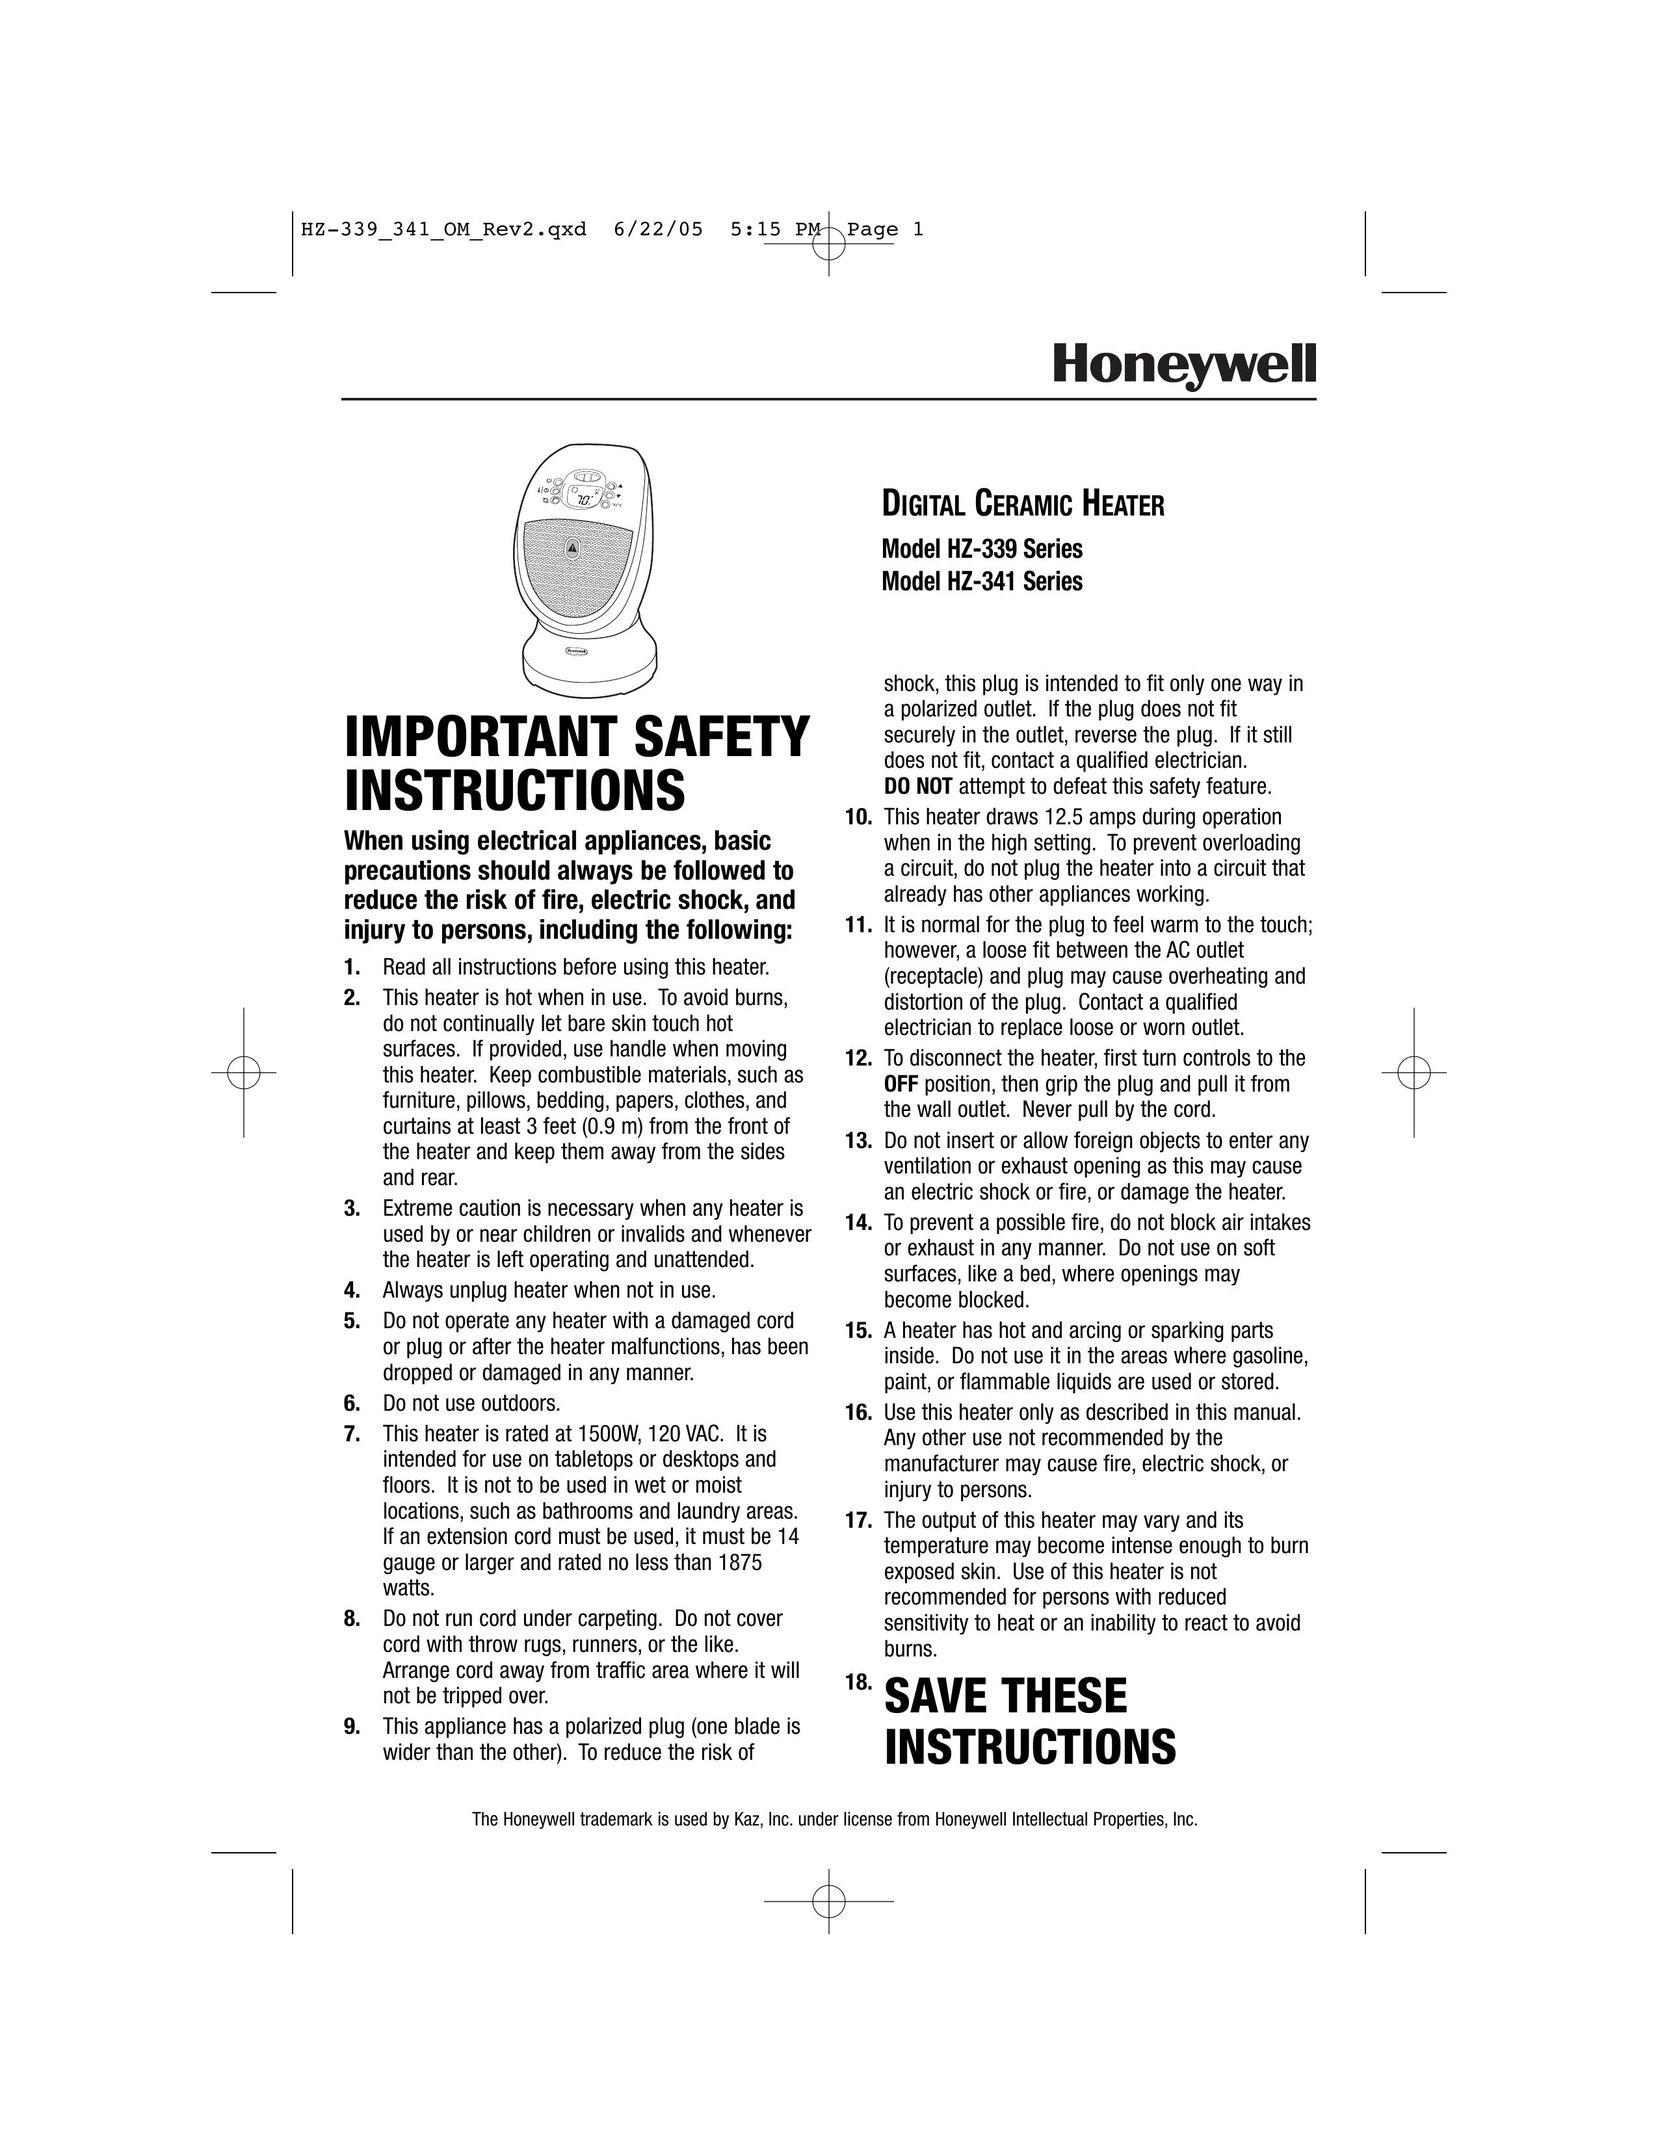 Honeywell HZ-341 Electric Heater User Manual